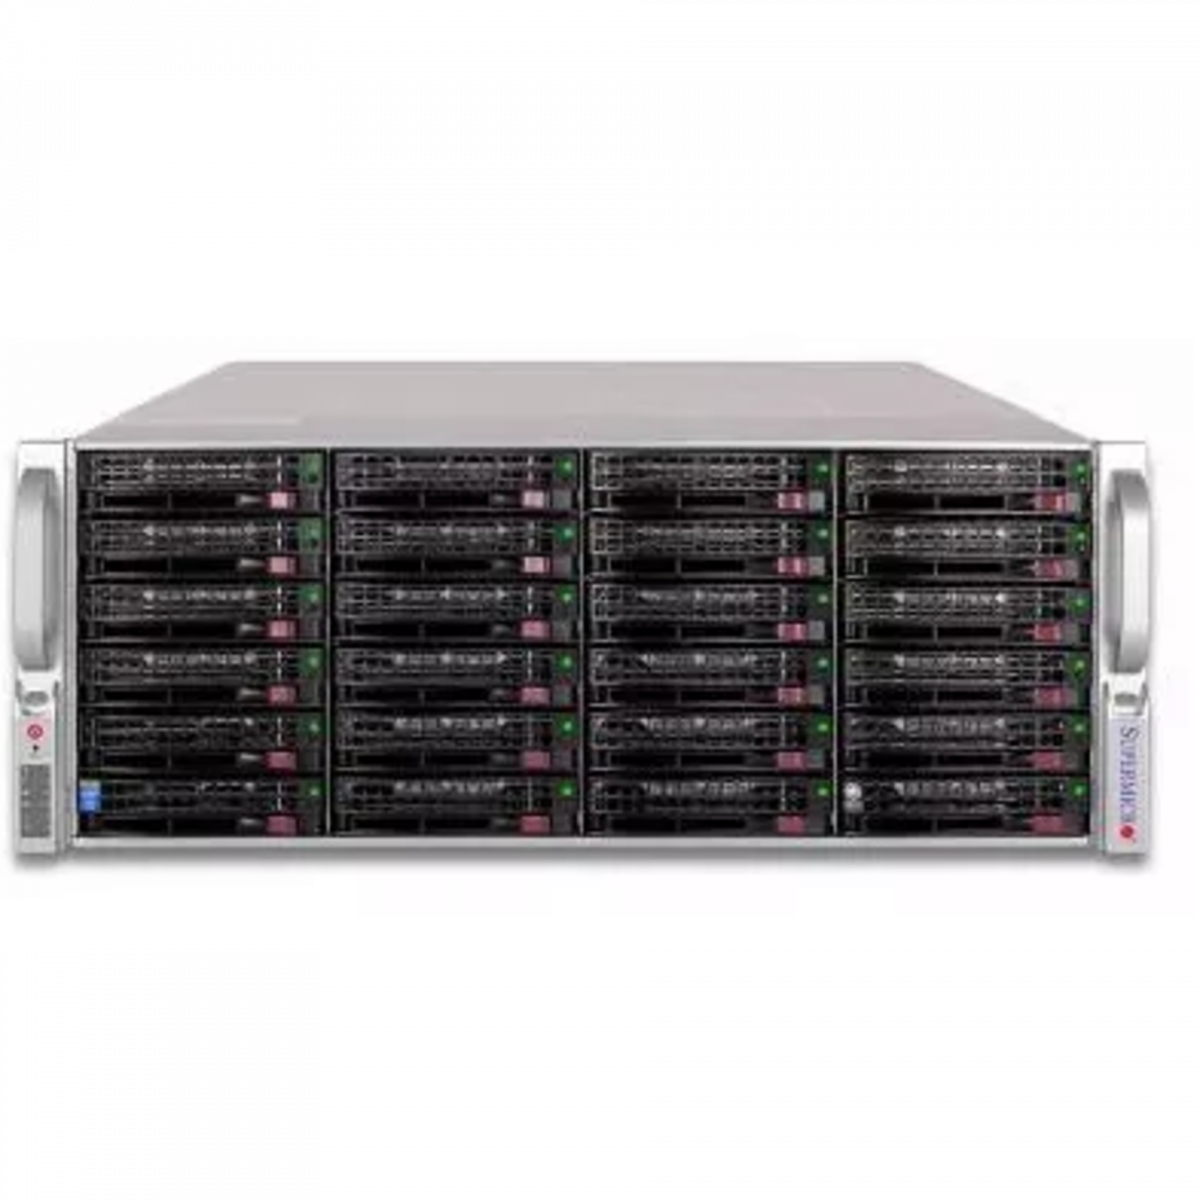 Сервер Supermicro SSG-6047R-E1R36N, 2 процессора Intel 10C E5-2680v2 2.20GHz, 64GB DRAM